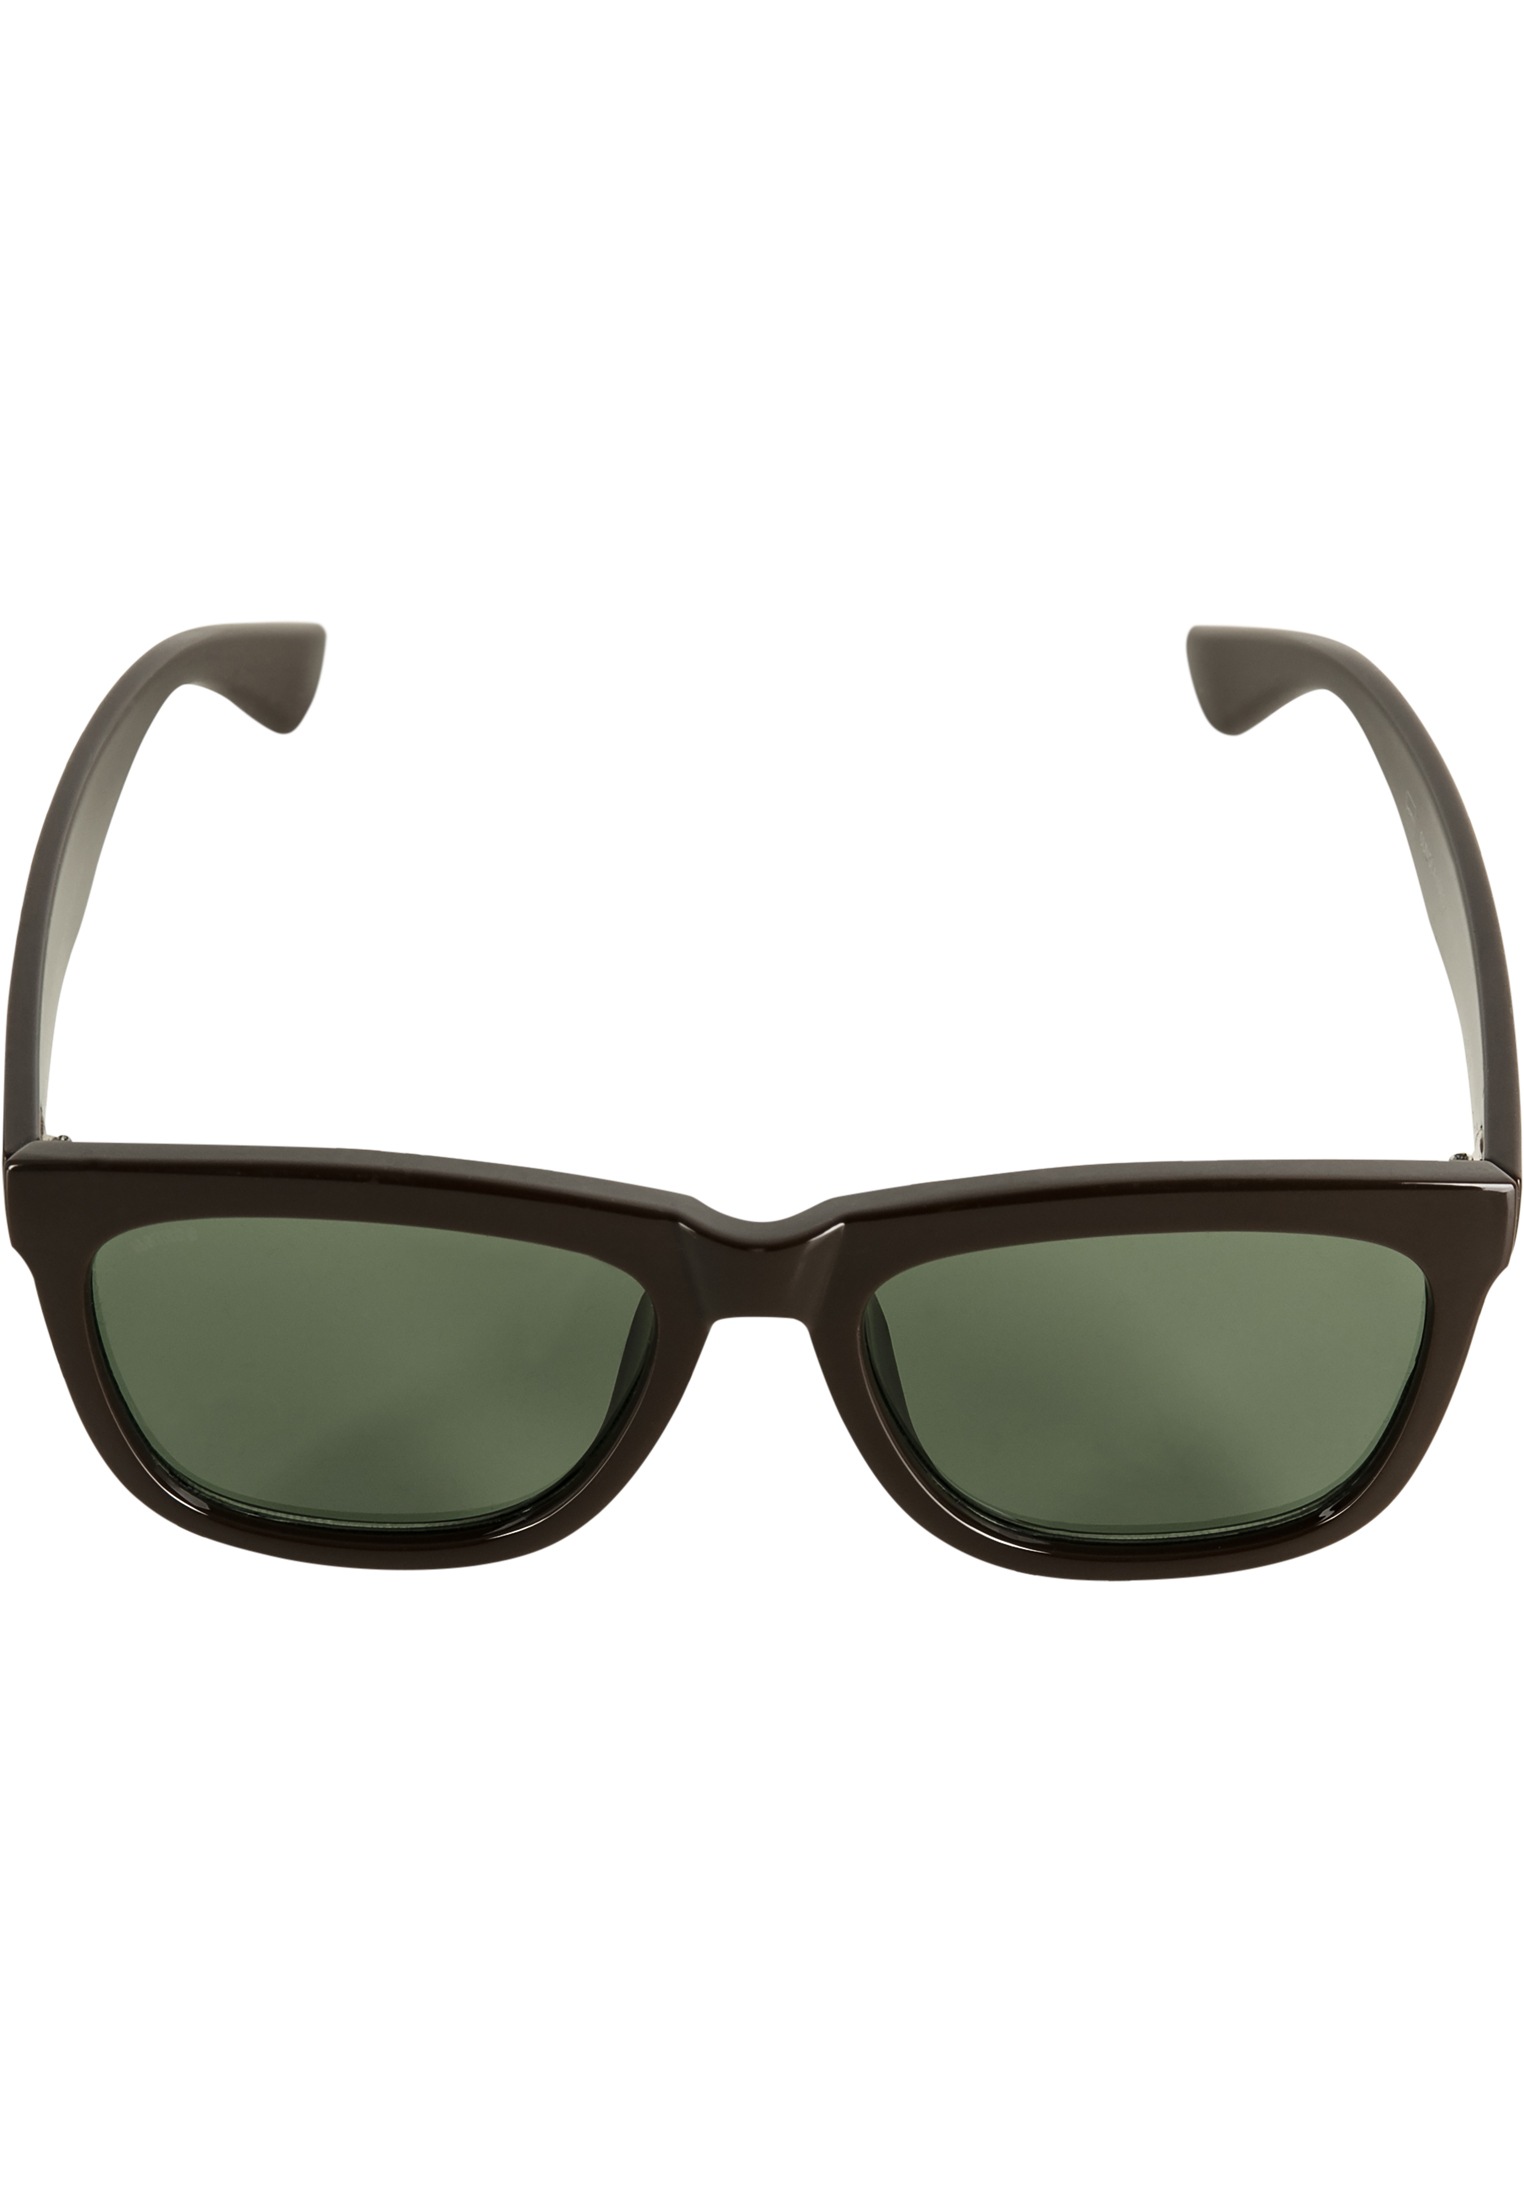 MSTRDS Sonnenbrille »Accessoires online I\'m | Sunglasses September« walking kaufen